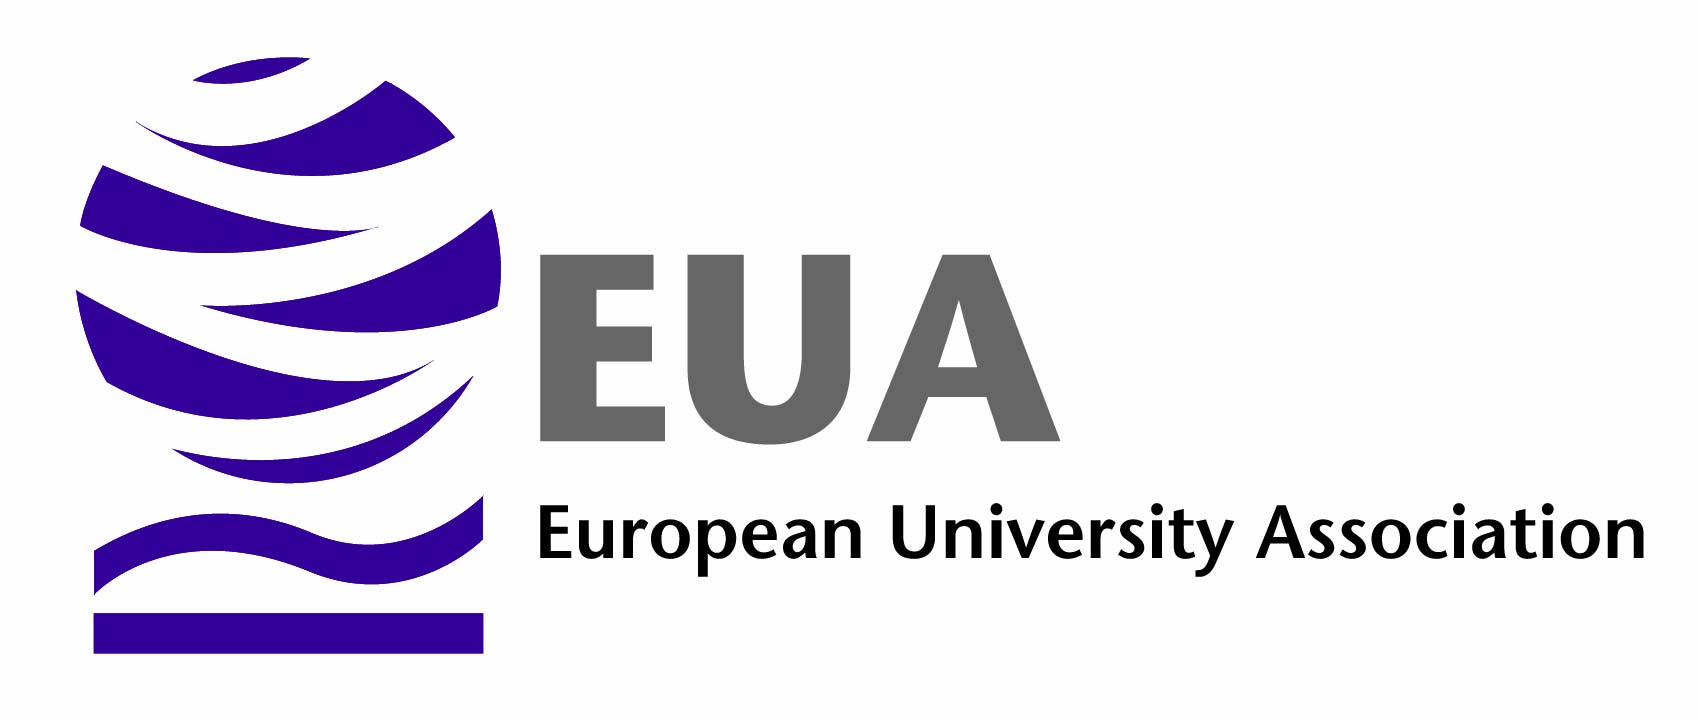 EE.UU. European University Association